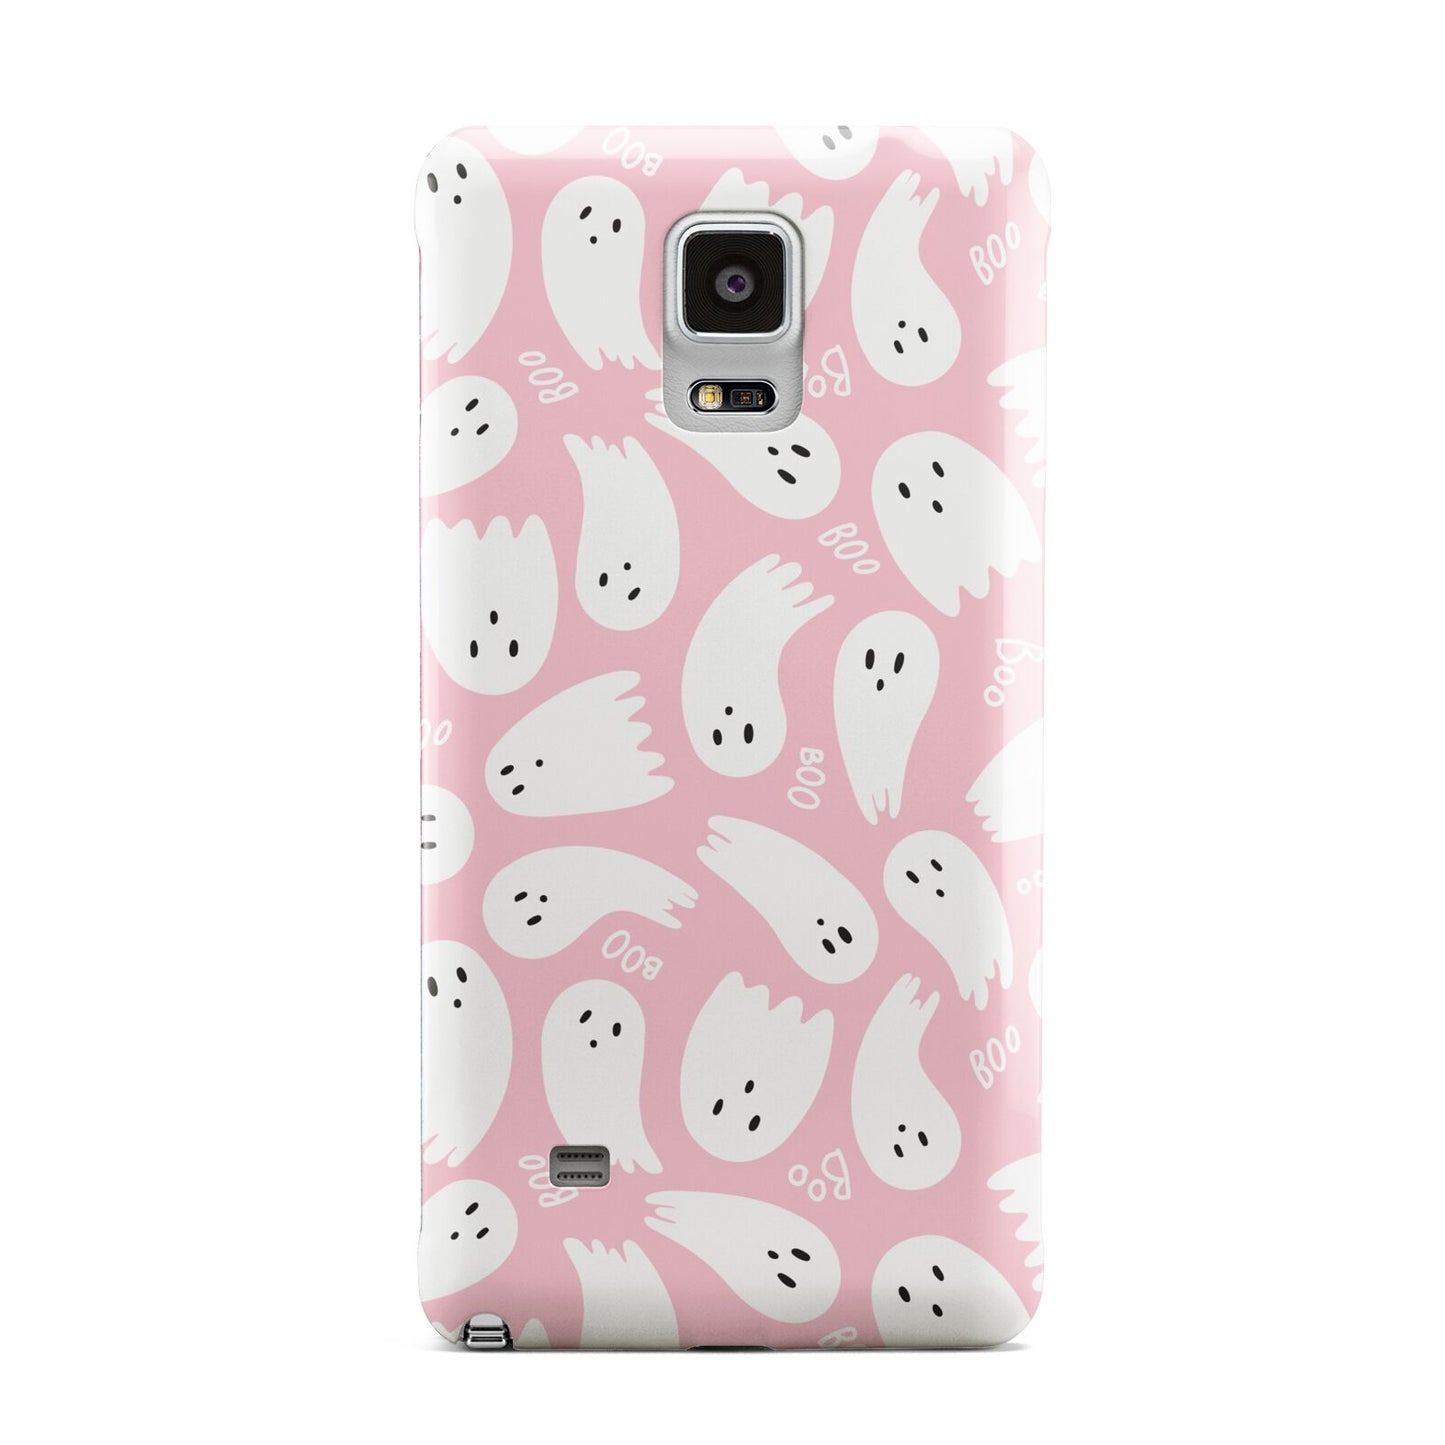 Pink Ghost Samsung Galaxy Note 4 Case